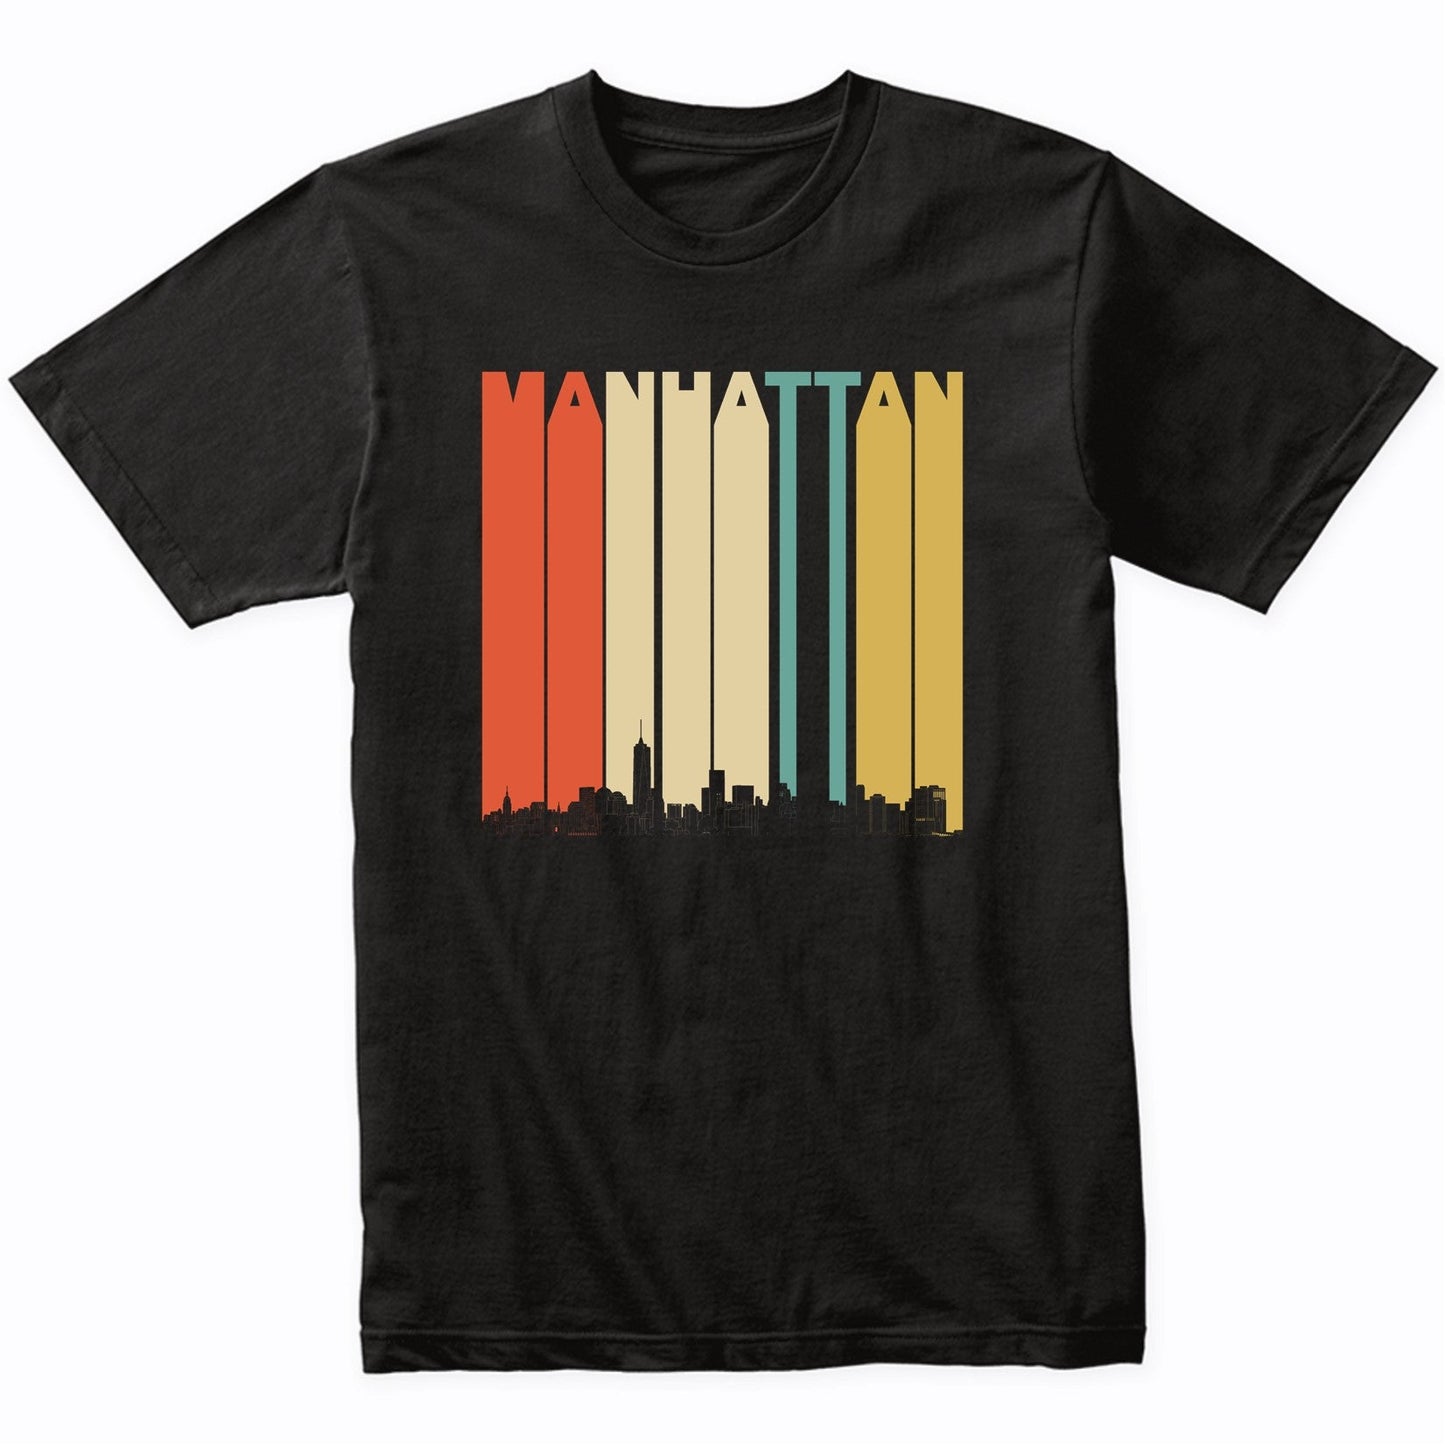 Vintage 1970's Style Manhattan New York Skyline T-Shirt